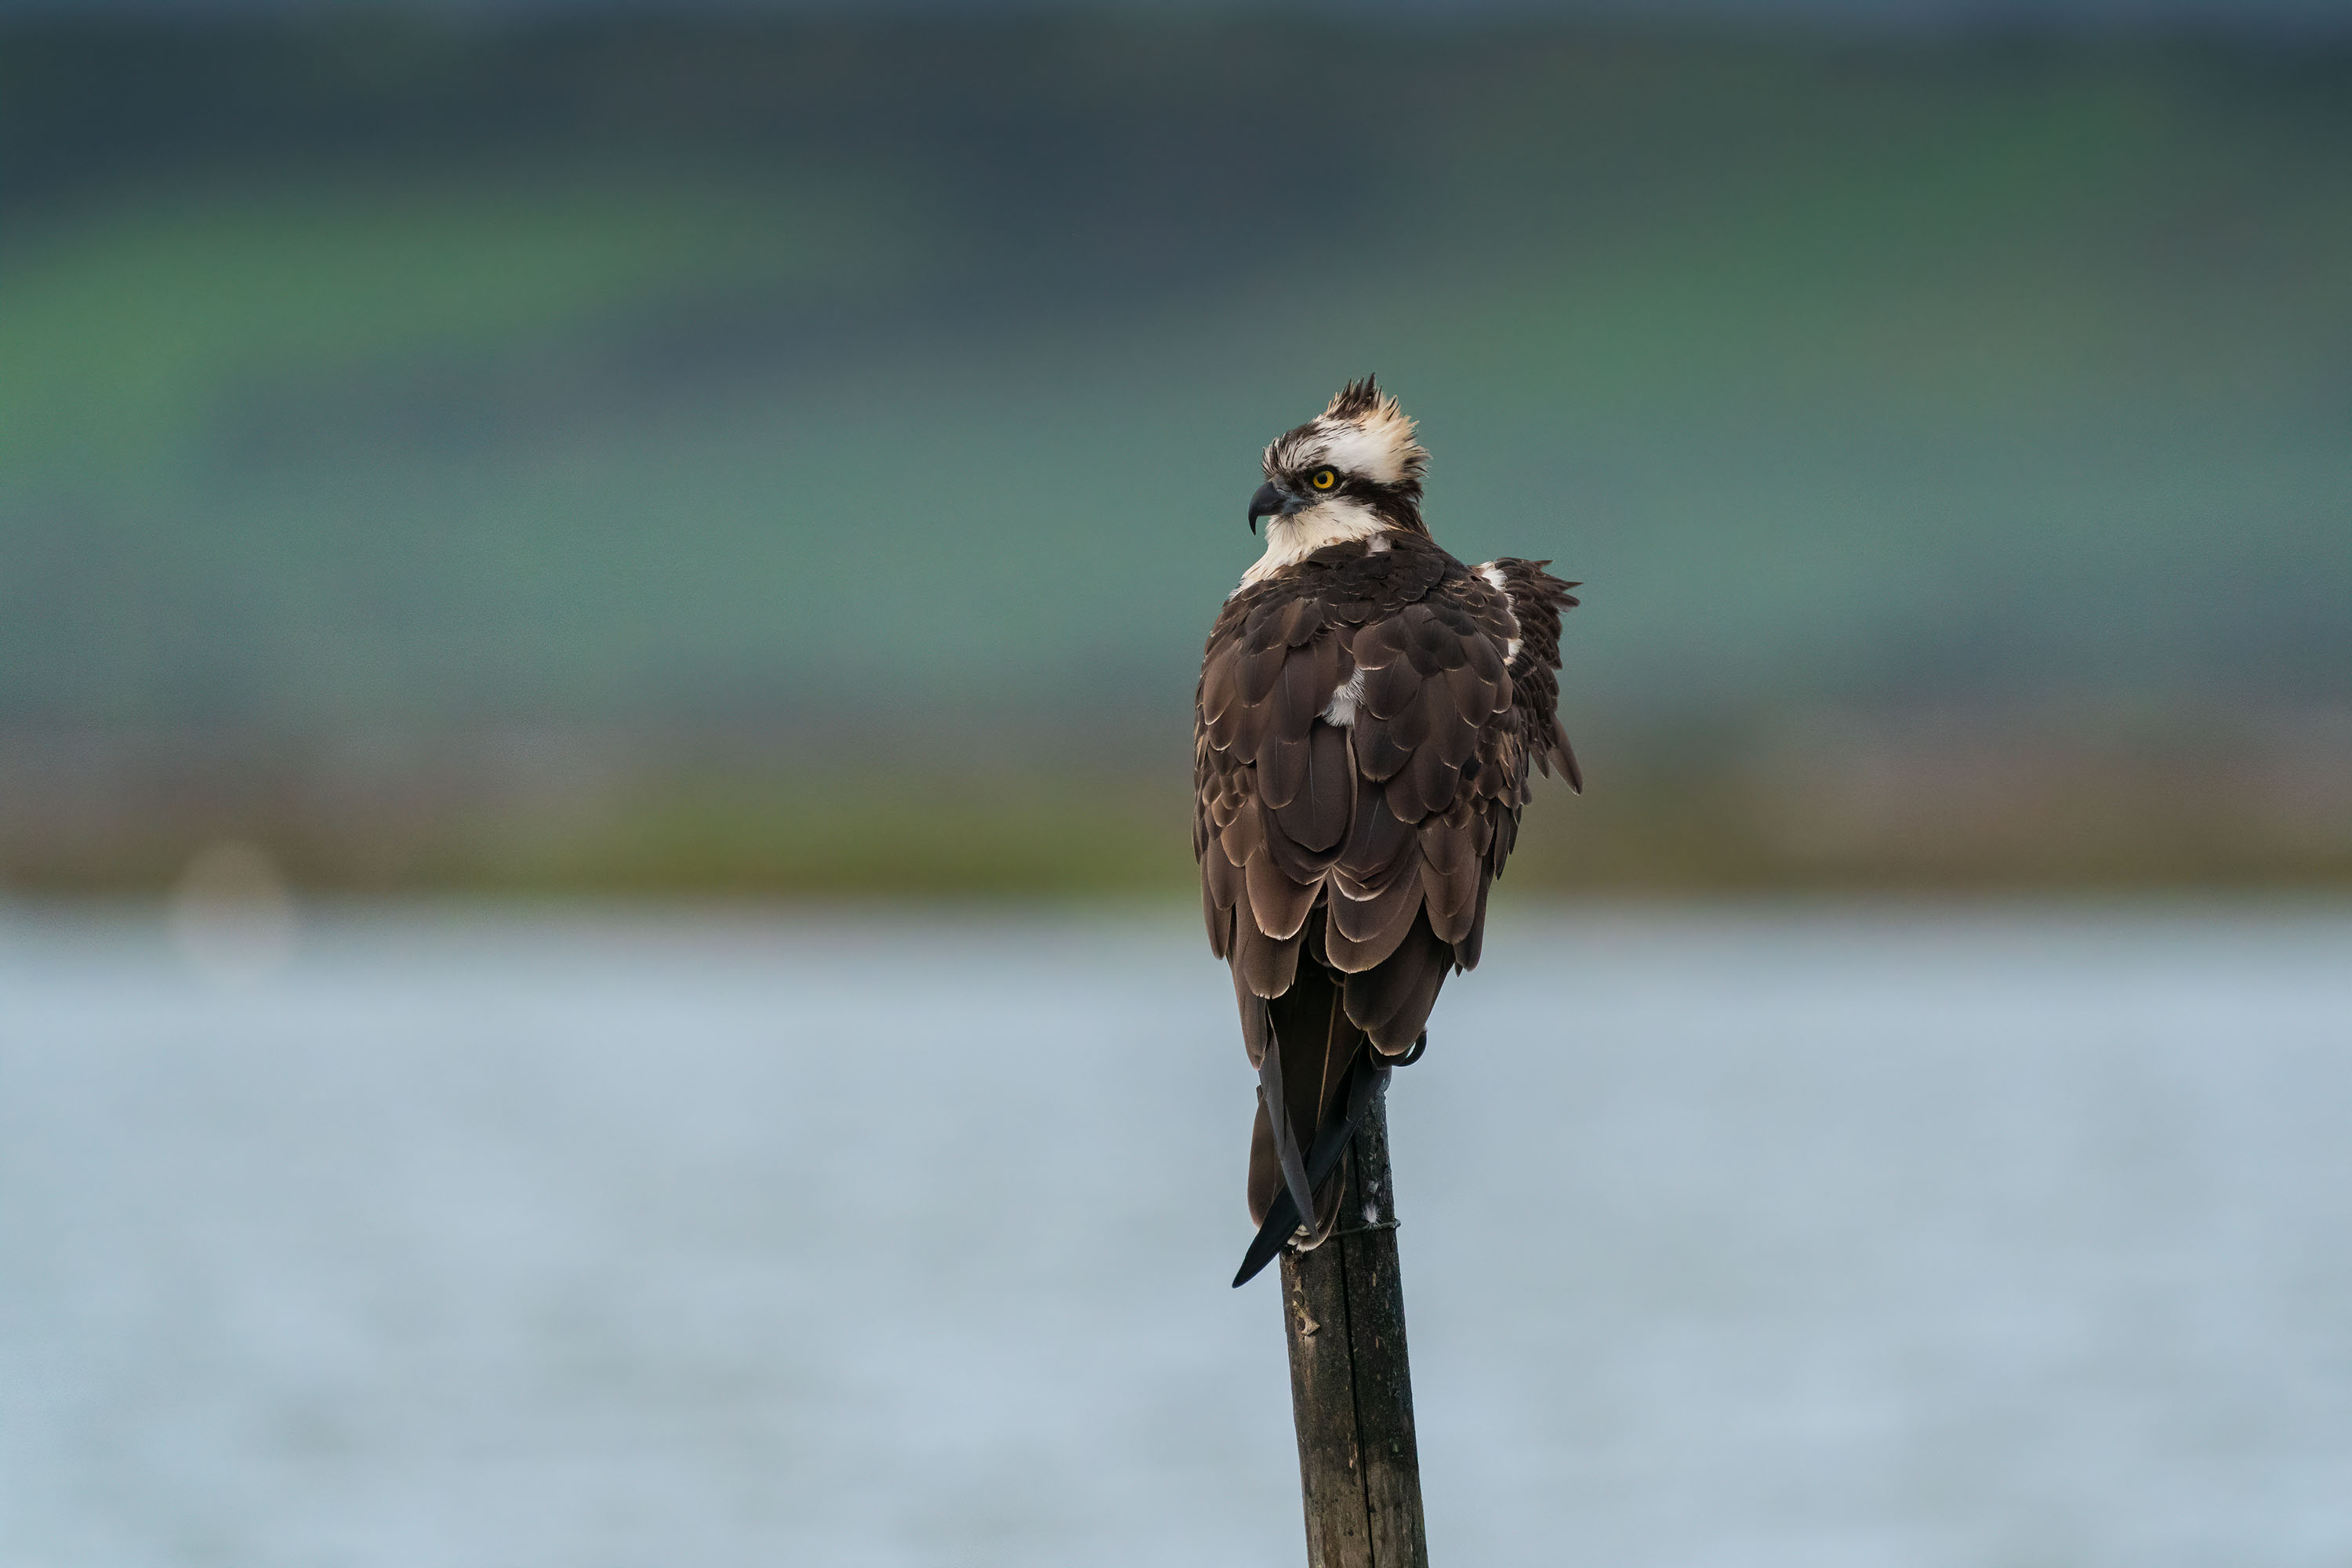 How to photograph an osprey